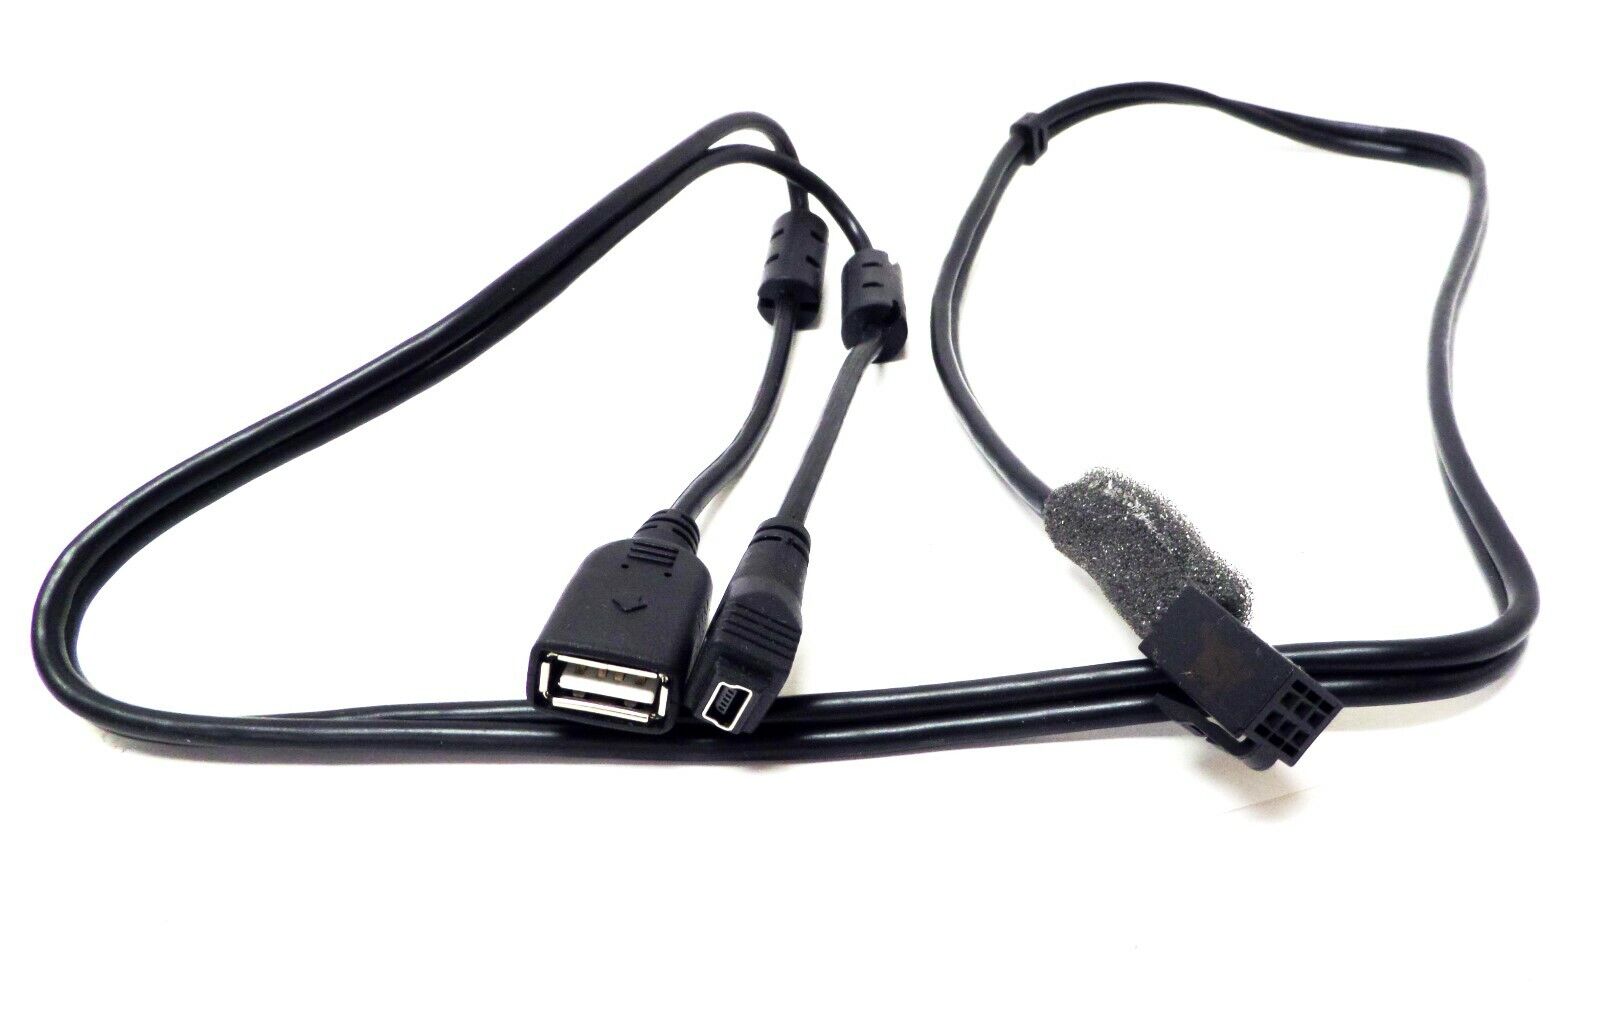 Mini USB Cable Male, Female USB Sync Charging Data Cable 40\